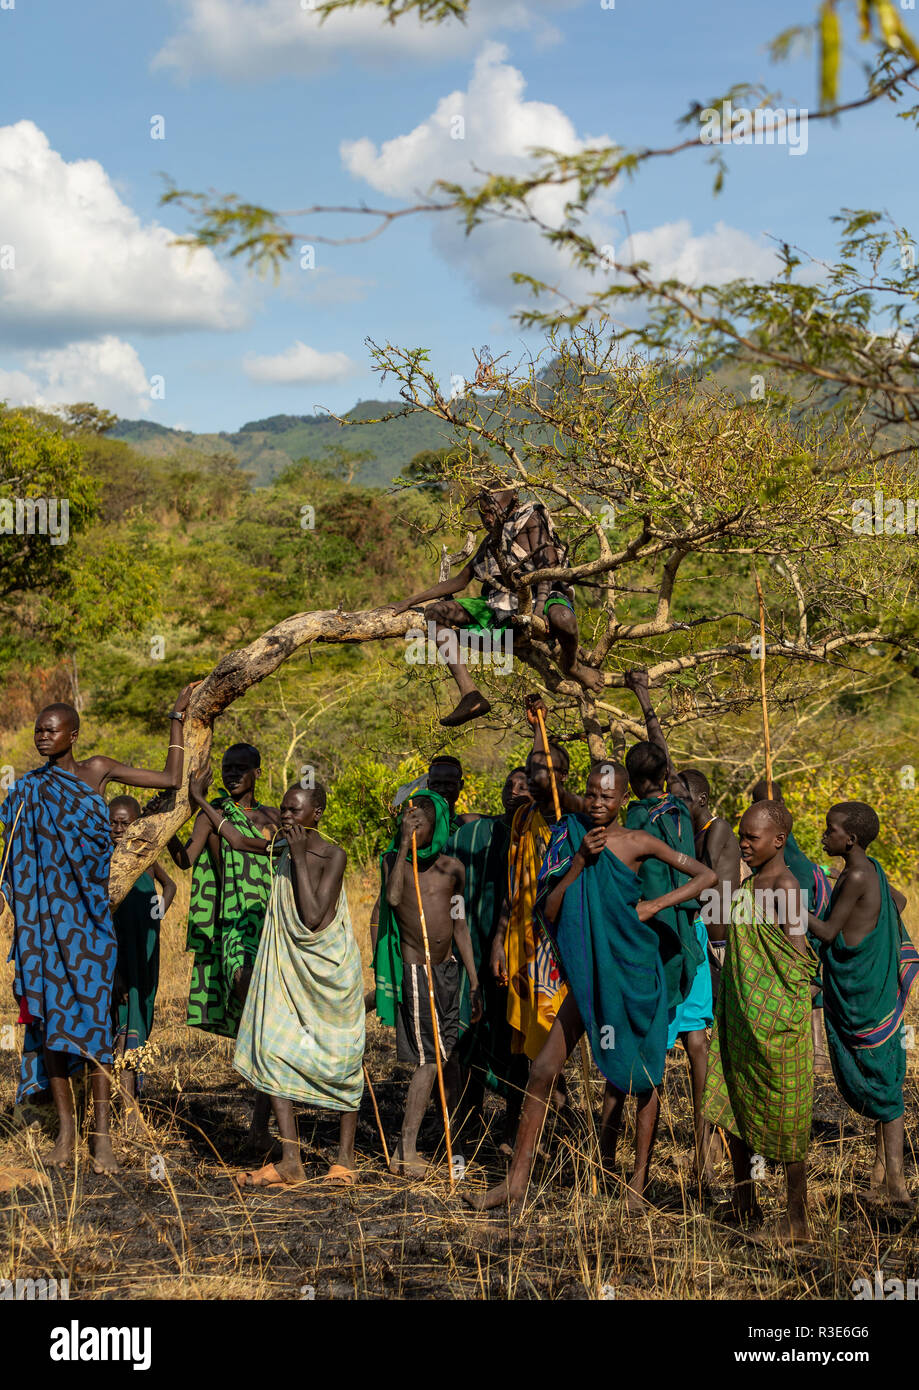 Suri tribe women watching a donga stick fighting ritual, Omo valley, Kibish, Ethiopia Stock Photo